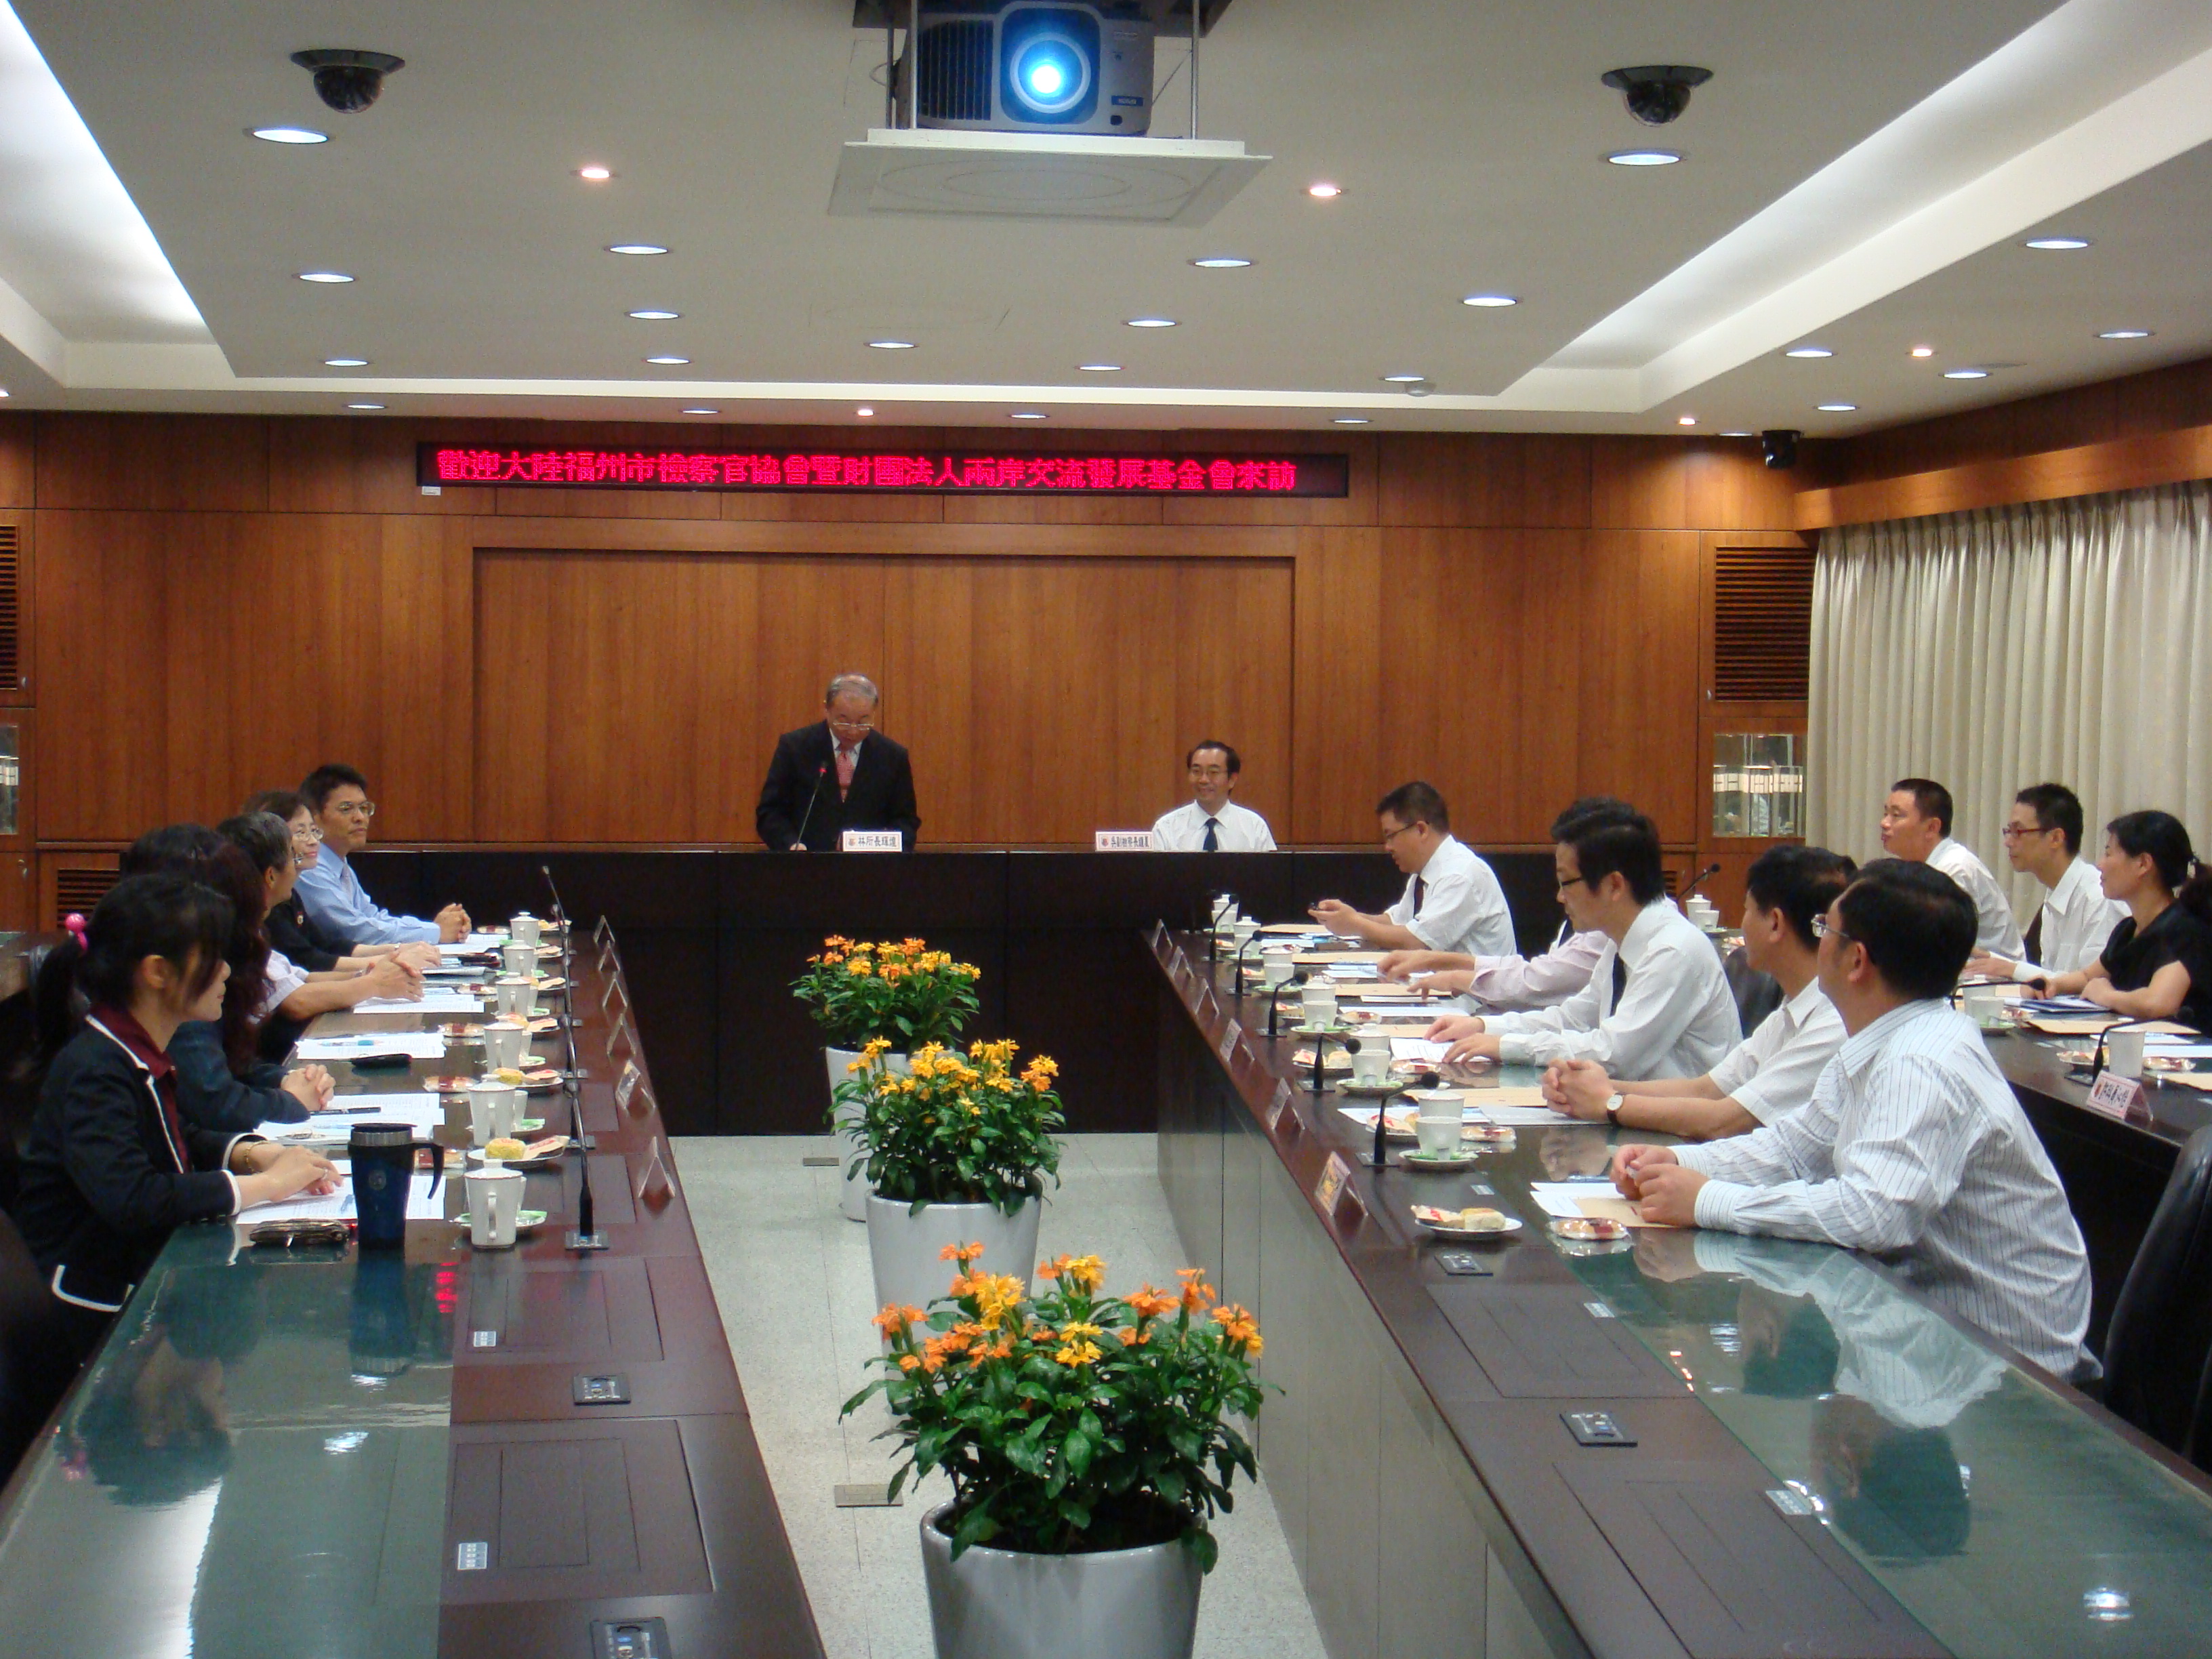 Fuzhou Prosecutors Association members led by Deputy Chief Wu Zhongxia of Fuzhou people's procuratorate of Fujian Province visited JPTI on July 19th, 2010.